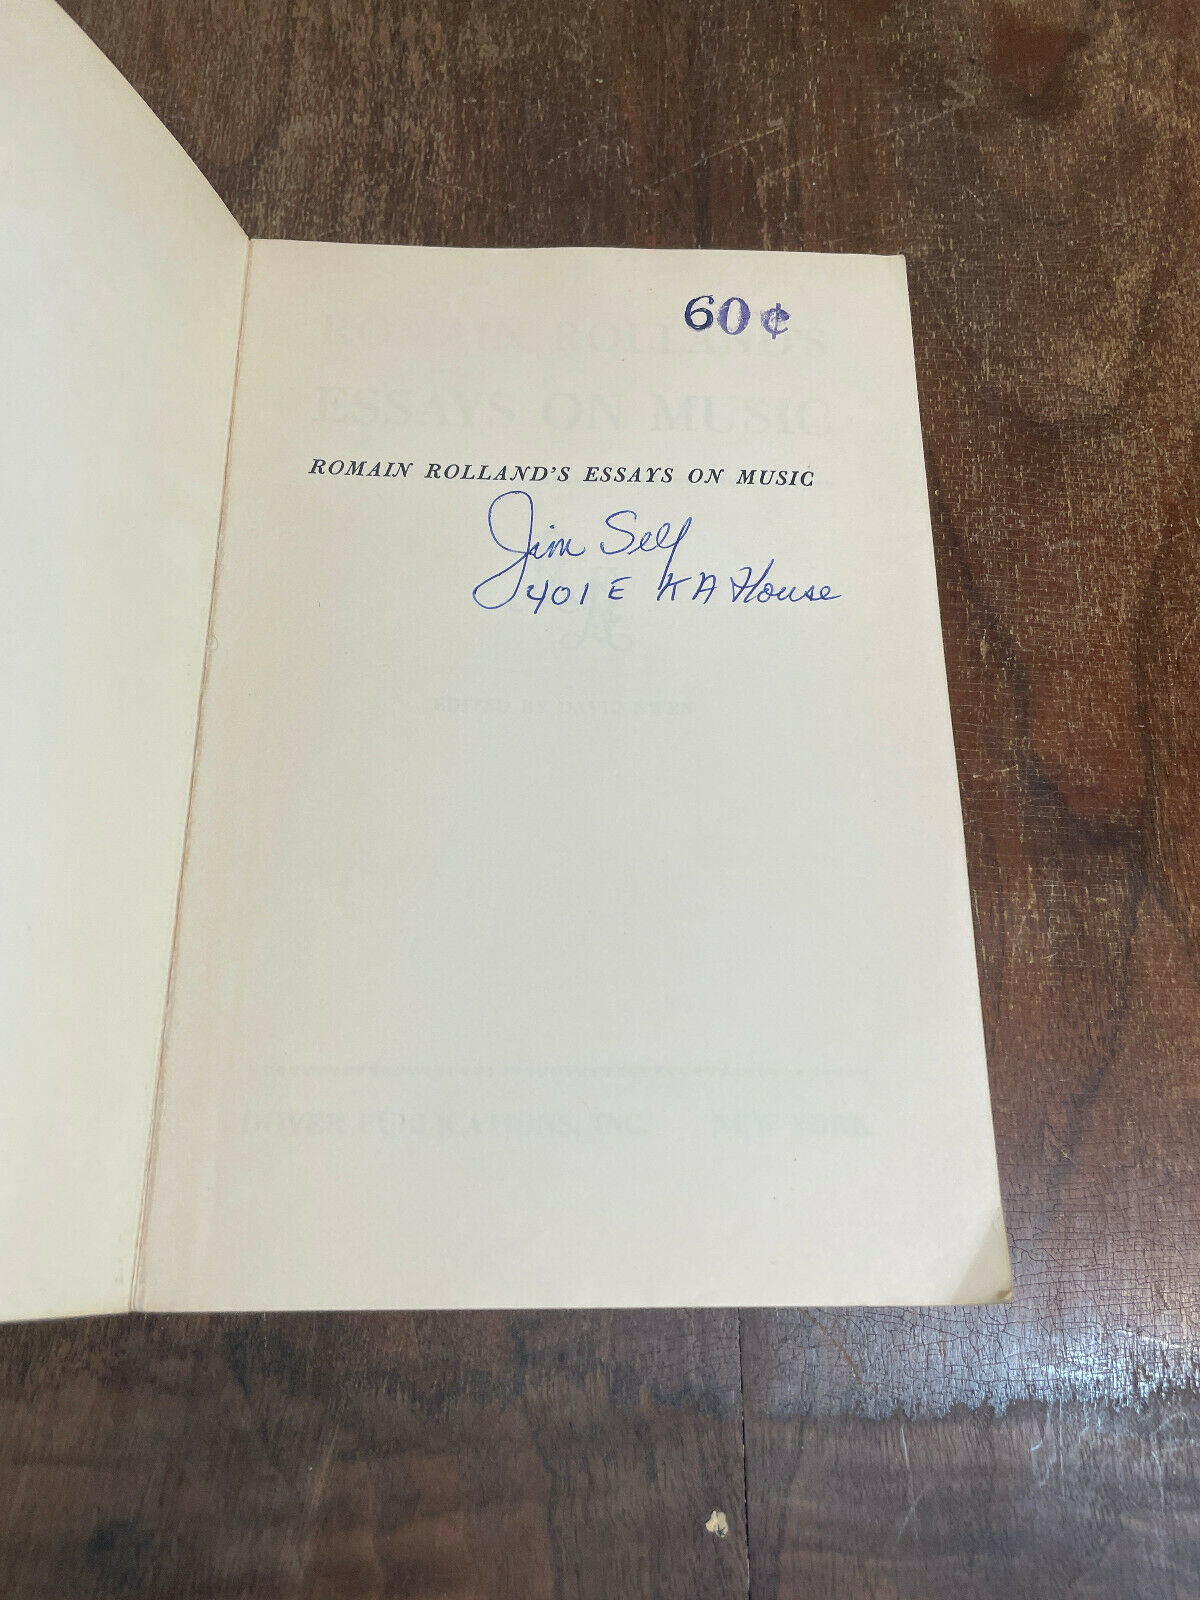 Romain Rolland's Essays On Music edited by David Ewen 1959  PB